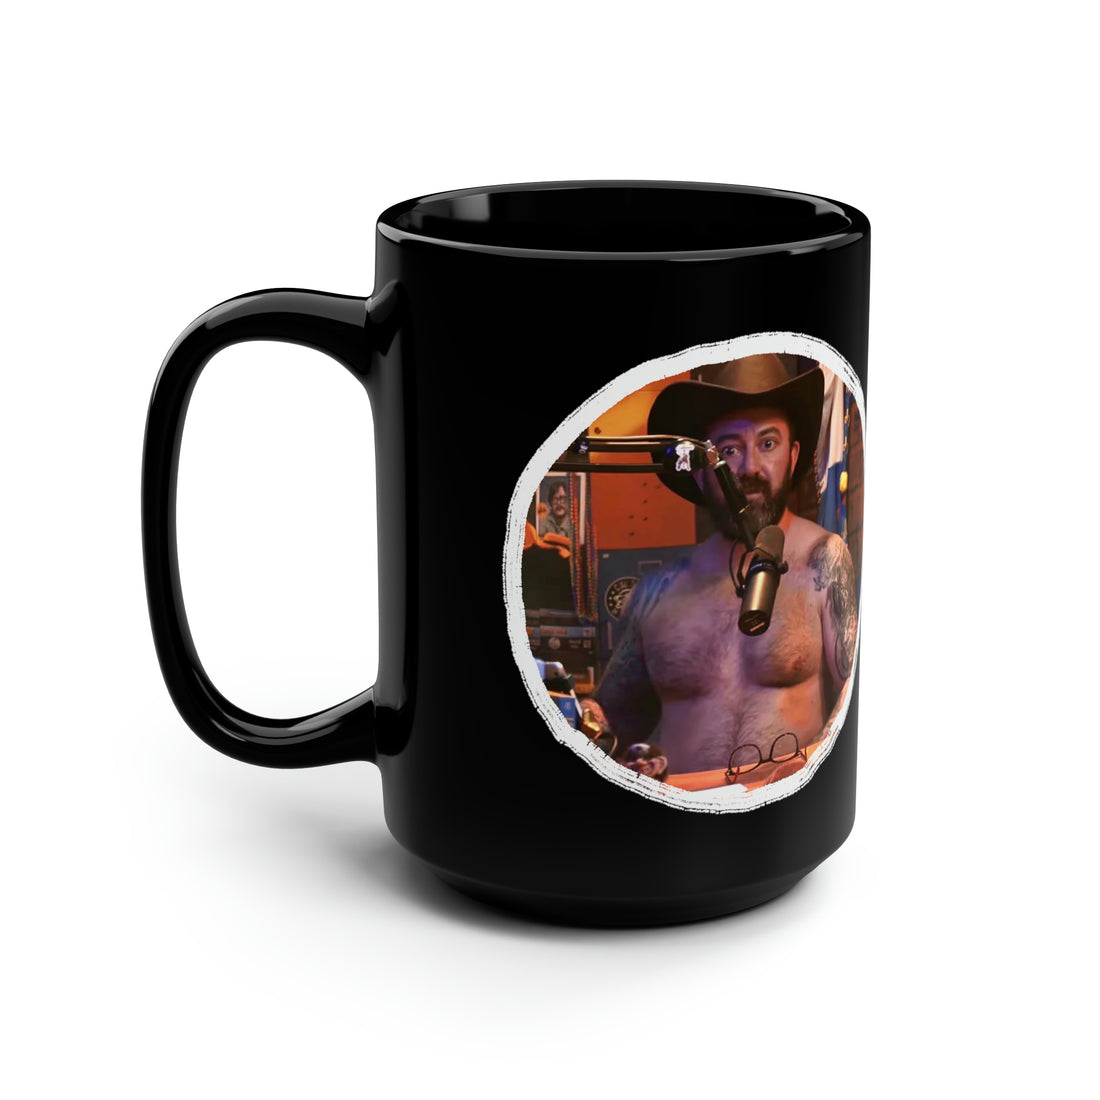 Space Cowboy Mug